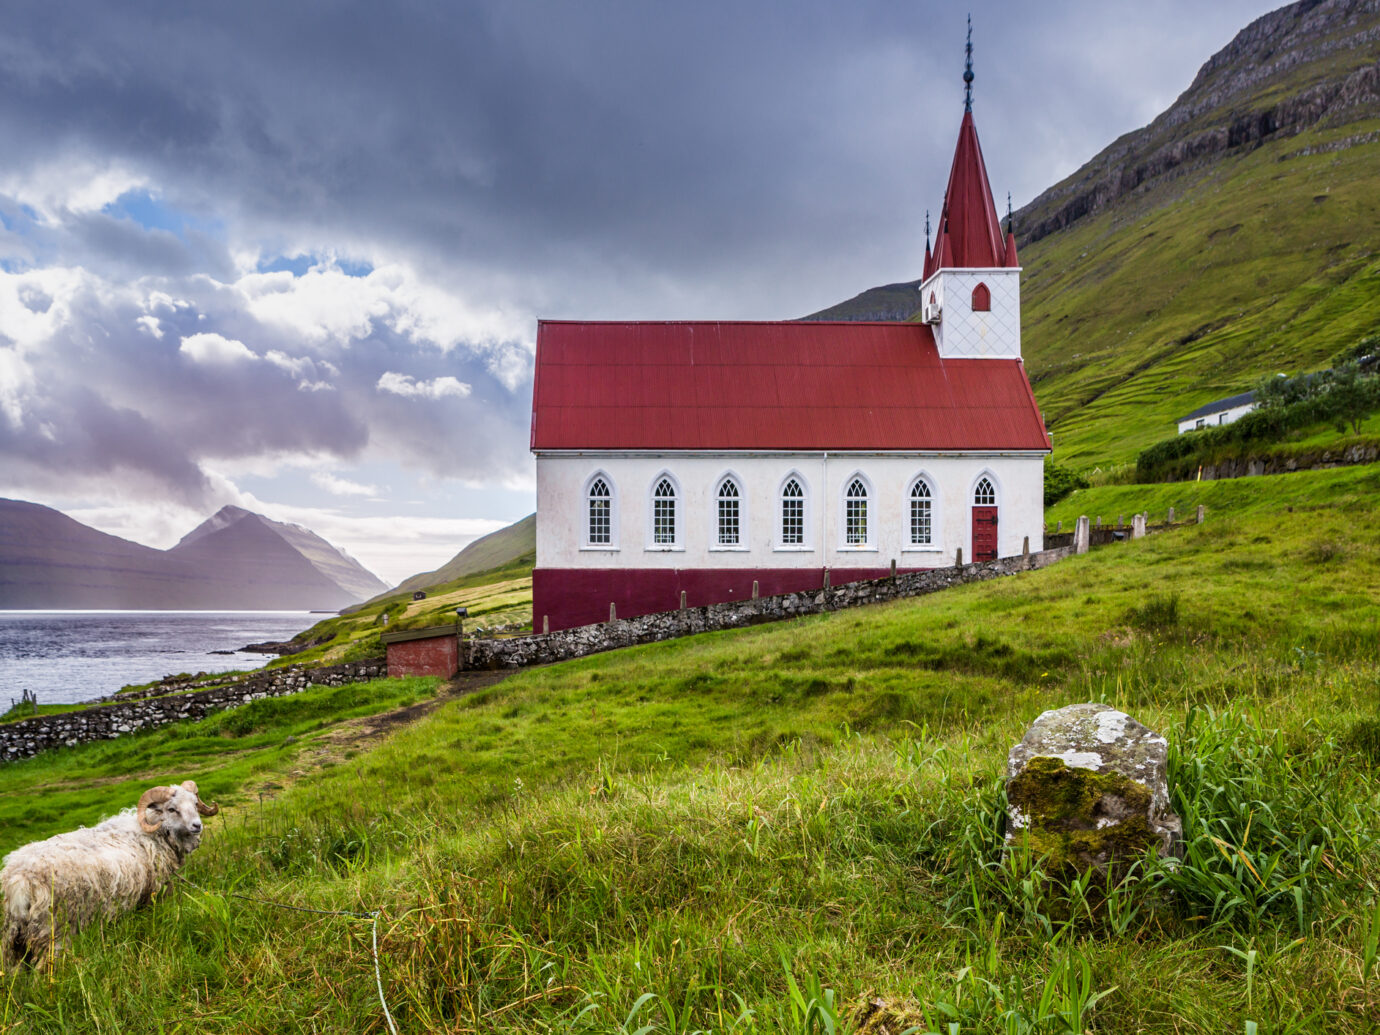 Kalsoy church in Faroe Islands whit sheep